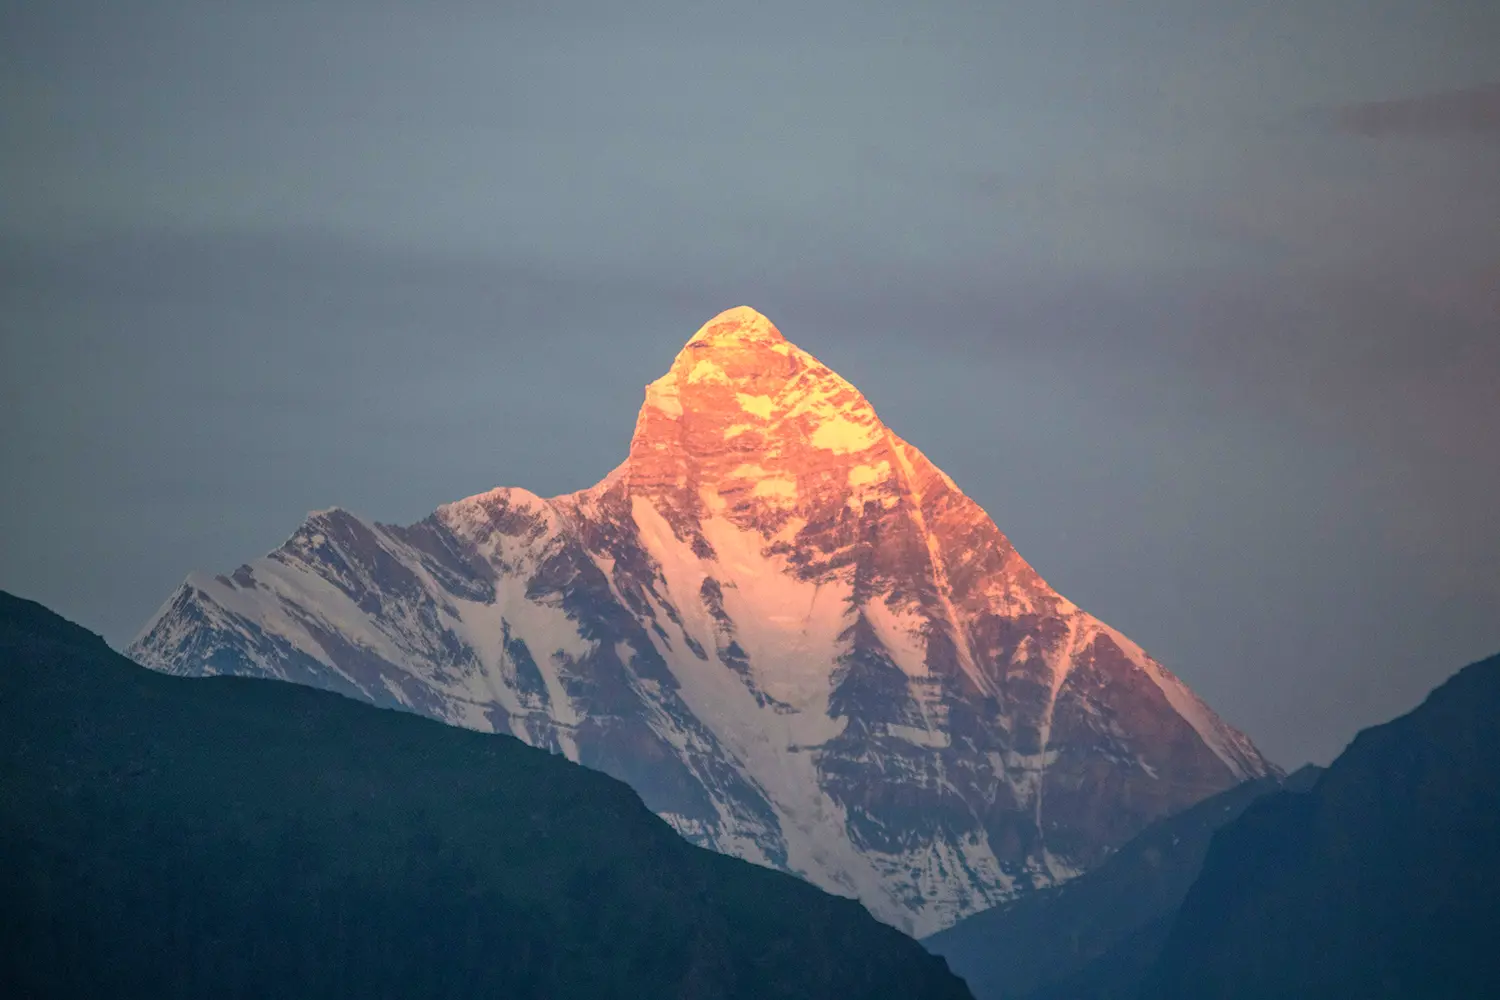 Captivating alpine glow on Mt. Nanda Devi as seen from the Nanda Devi Base Camp trek.